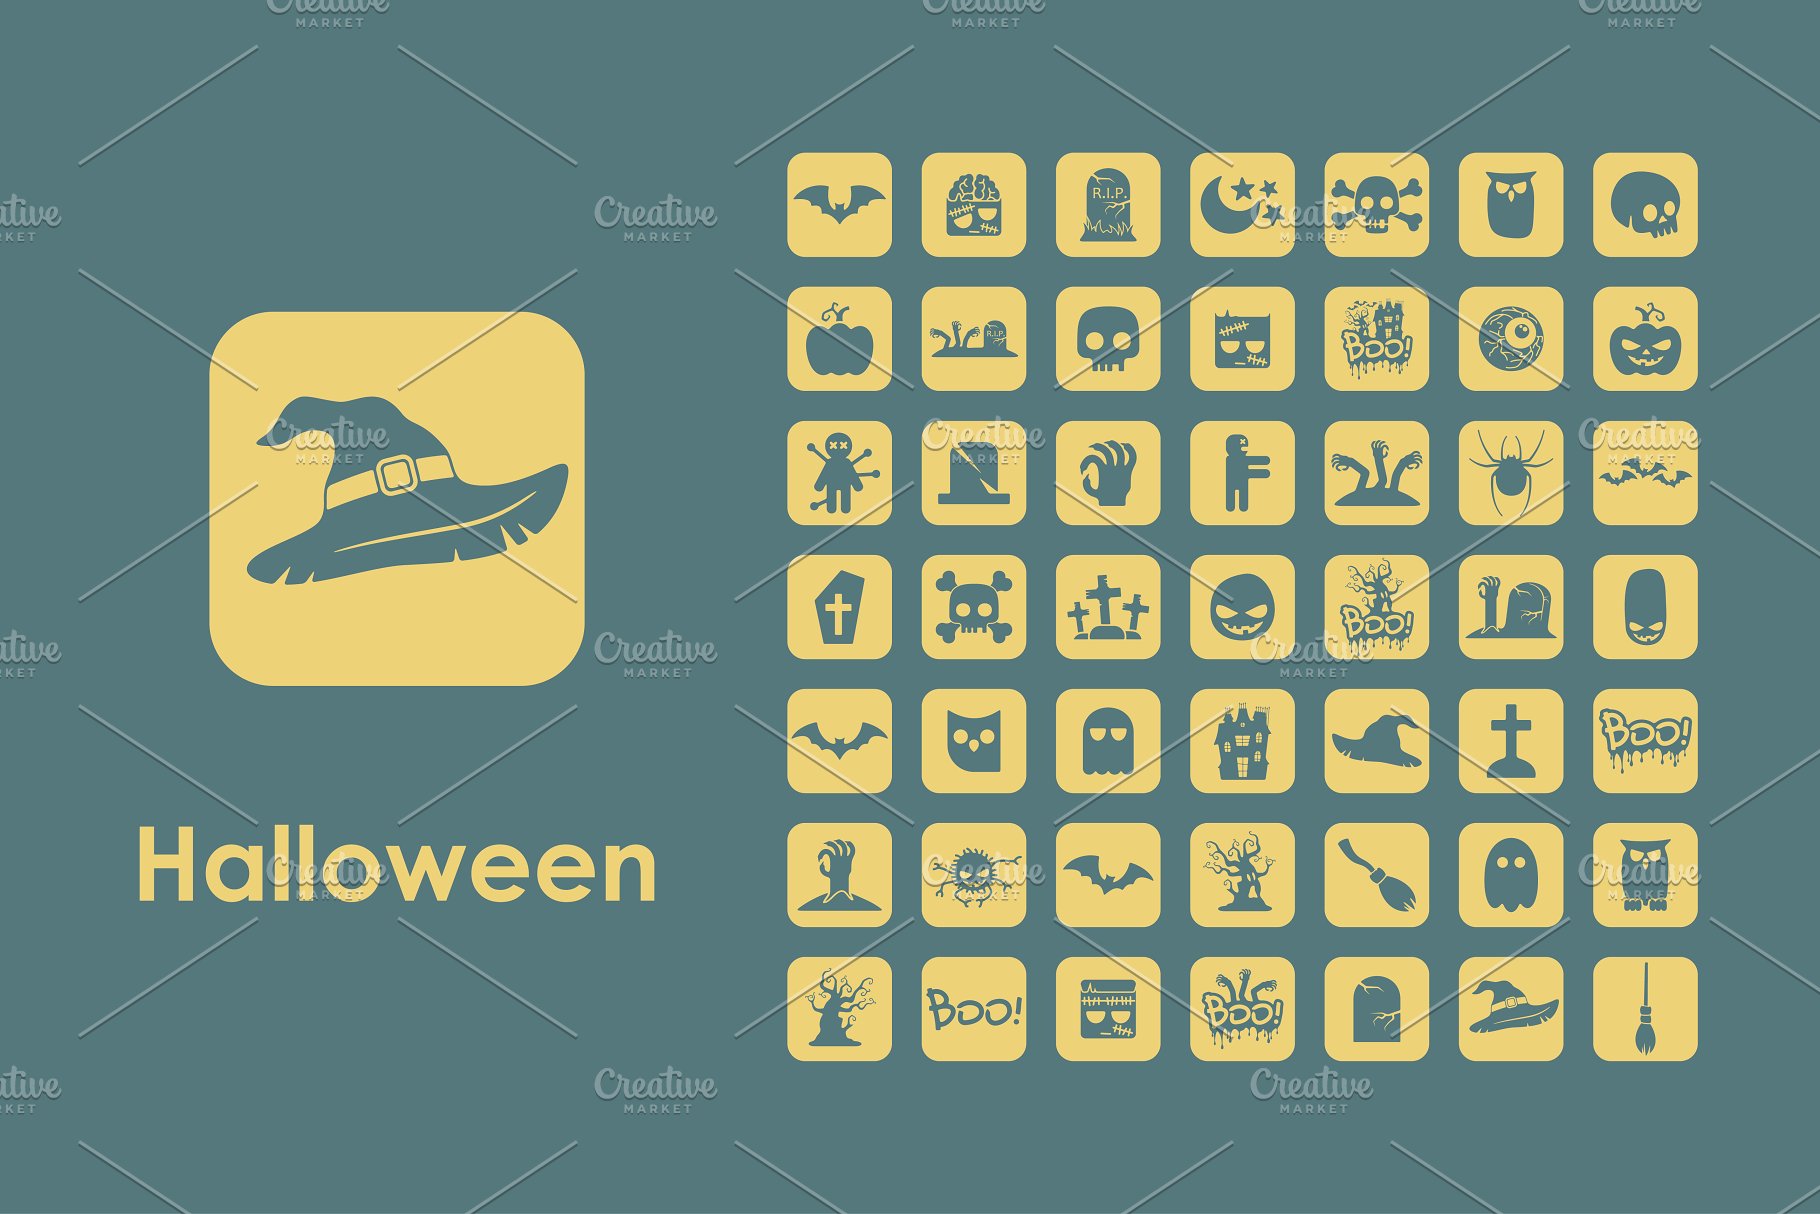 万圣节矢量图标素材 Halloween icons #136